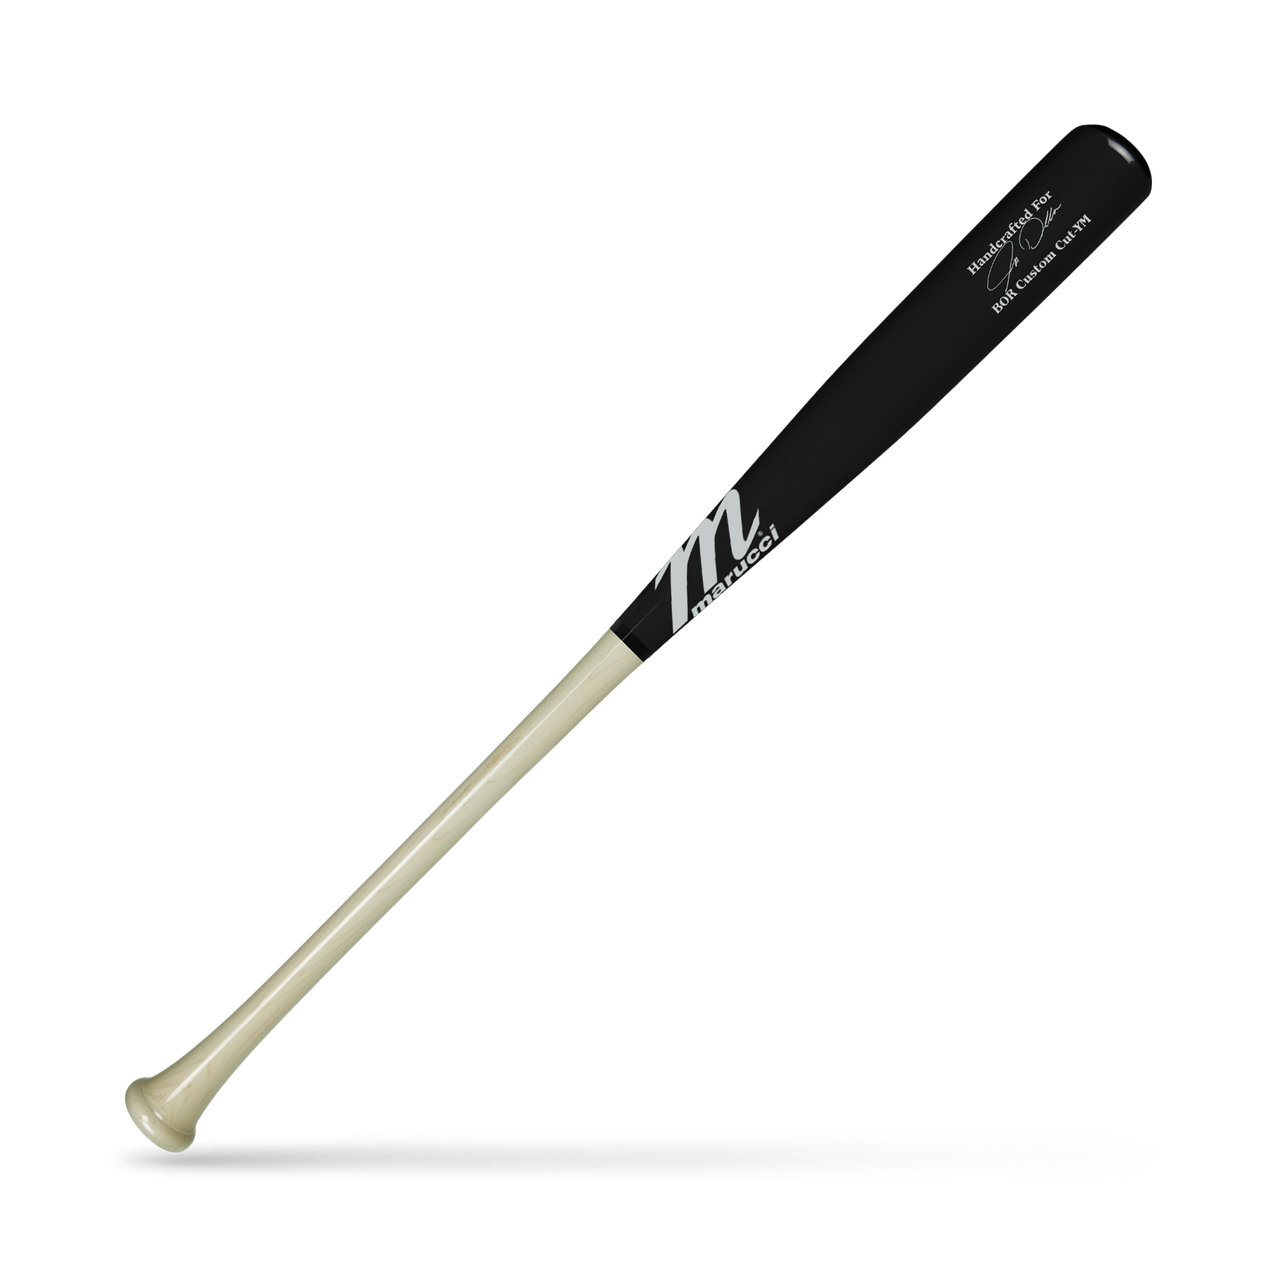 marucci-bringer-of-rain-youth-model-natural-black-wood-baseball-bat-30-inch MYVE3BOR-NBK-30 Marucci  The Marucci Josh Donaldson Bringer of Rain Pro Model Bat is